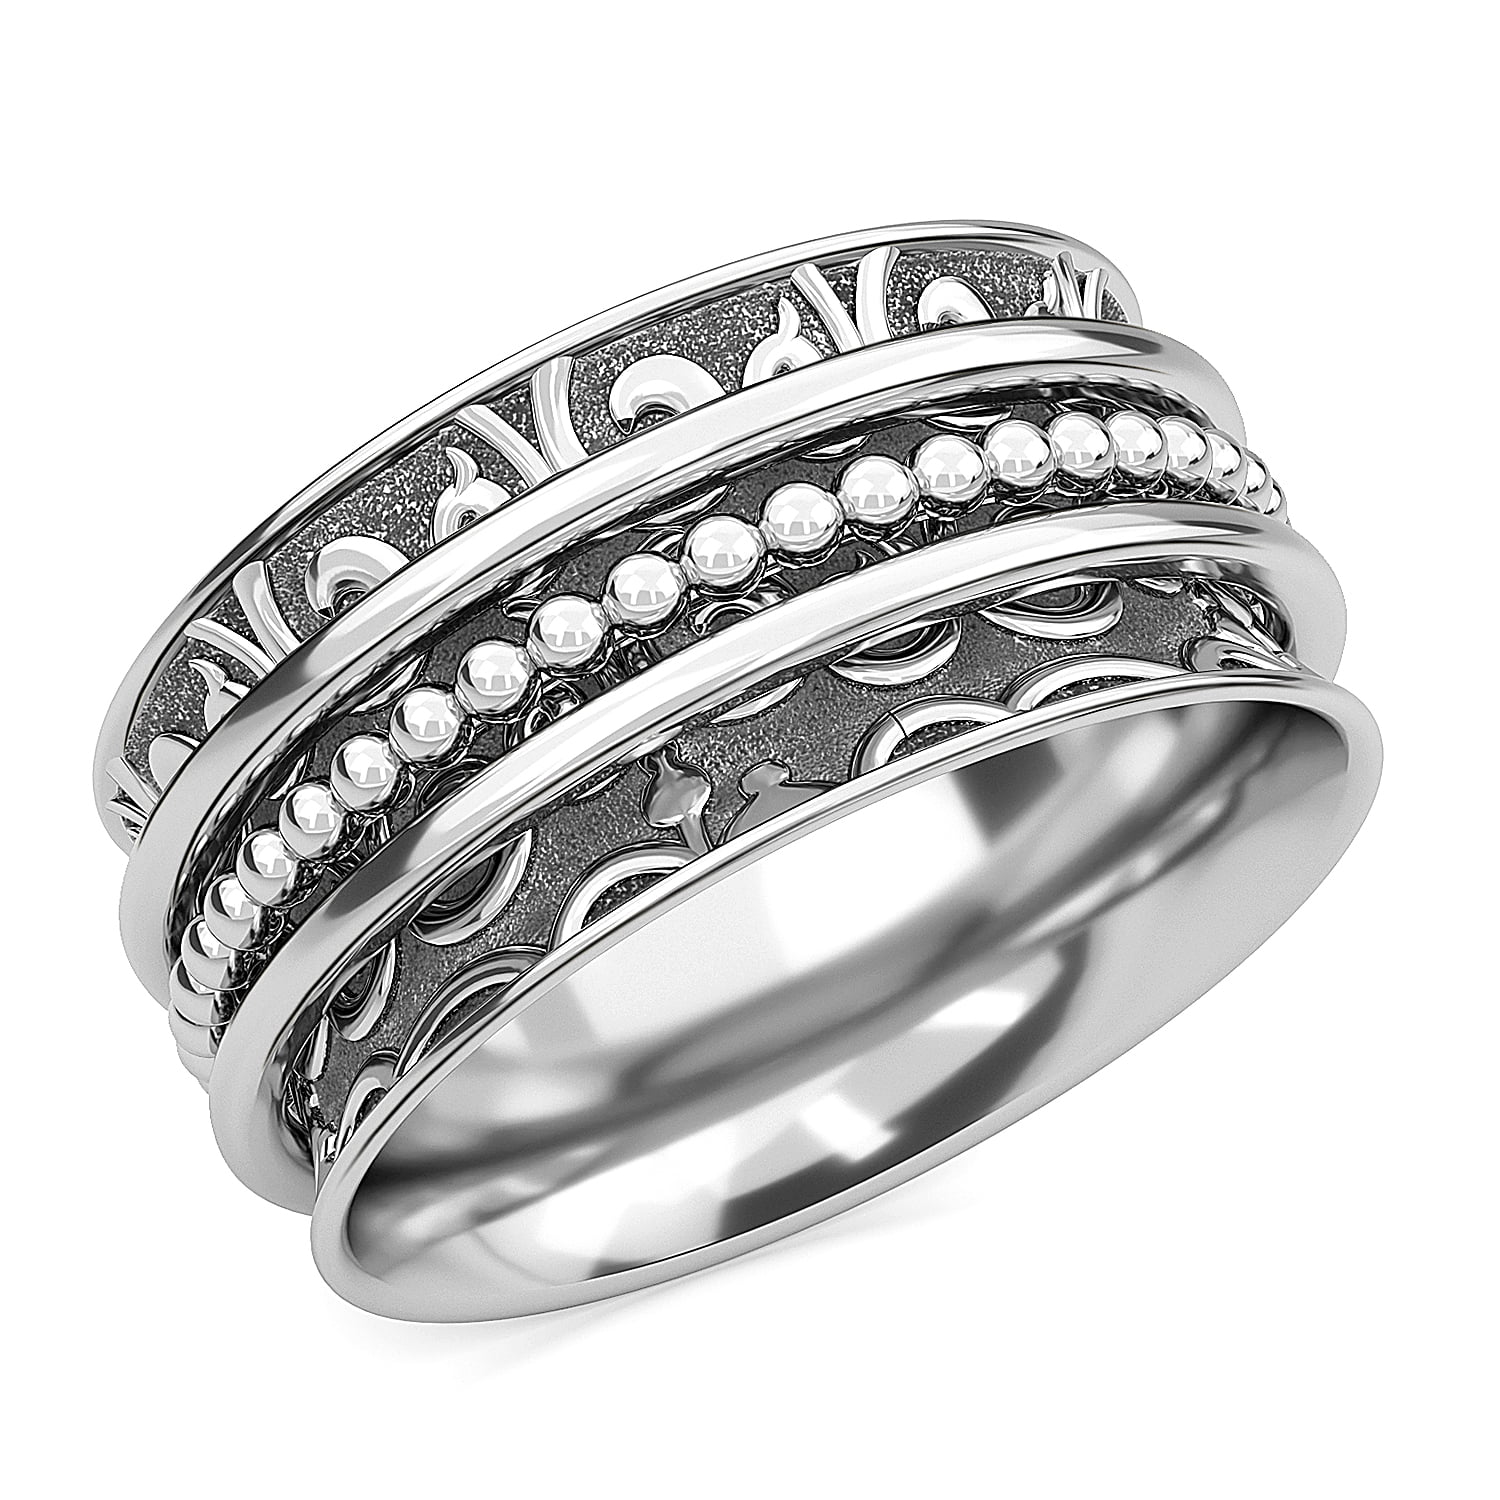 Garnet Silver Ring Size 7  925 Sterling Silver  Braided Swirl Setting  Ethnic Garnet Ring